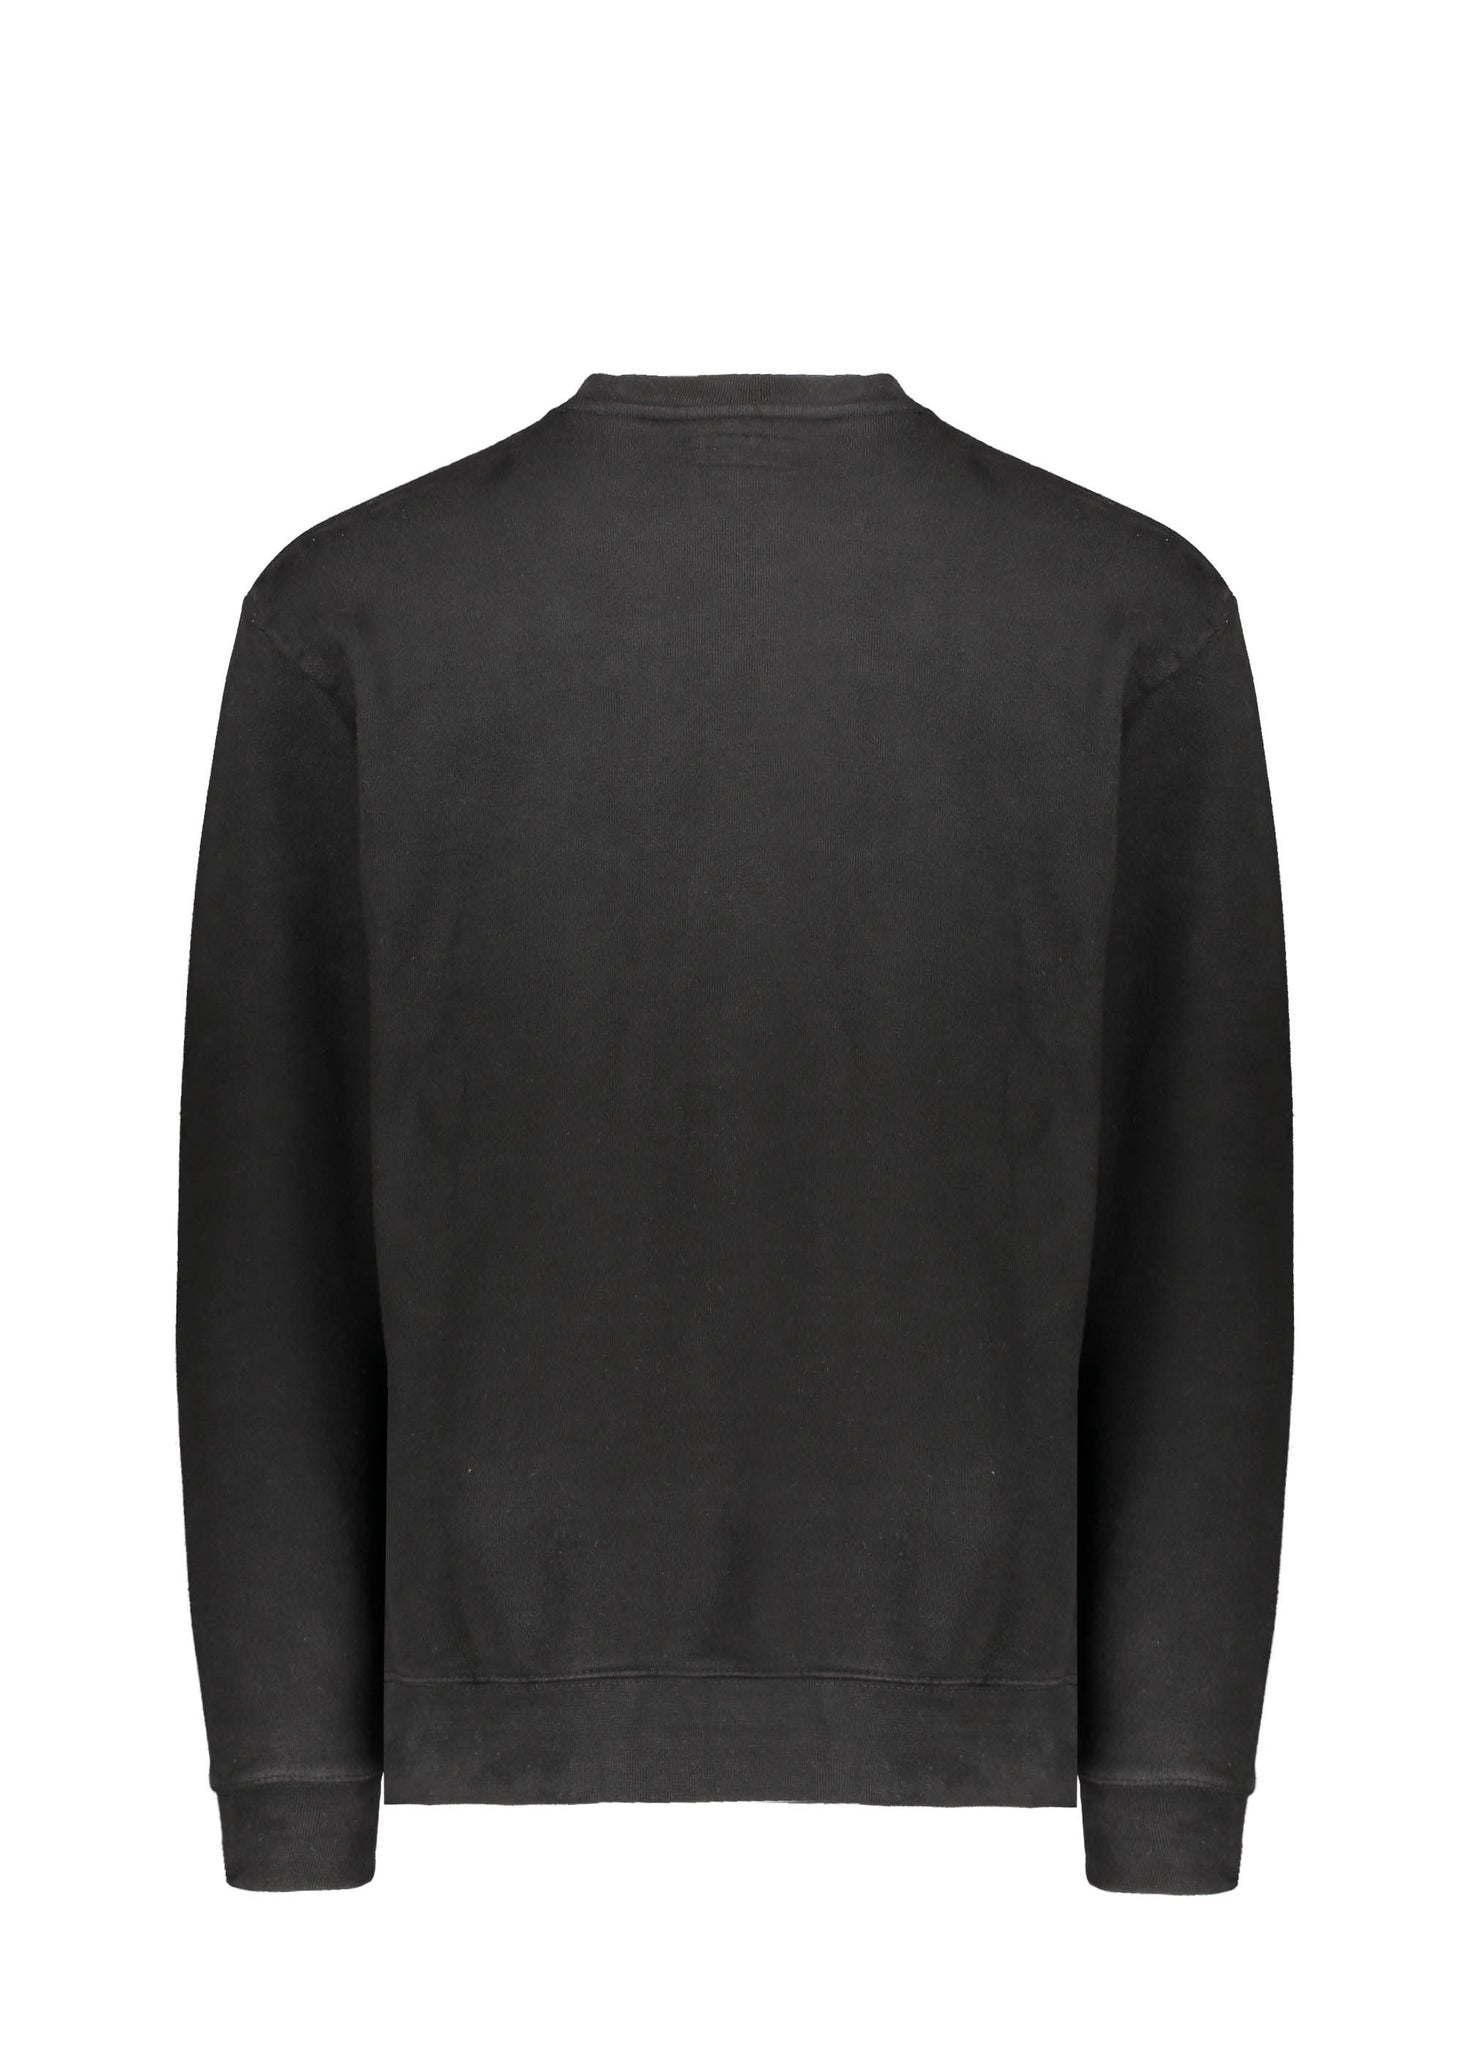 Market Smiley Oversized Crewneck Sweater - Black